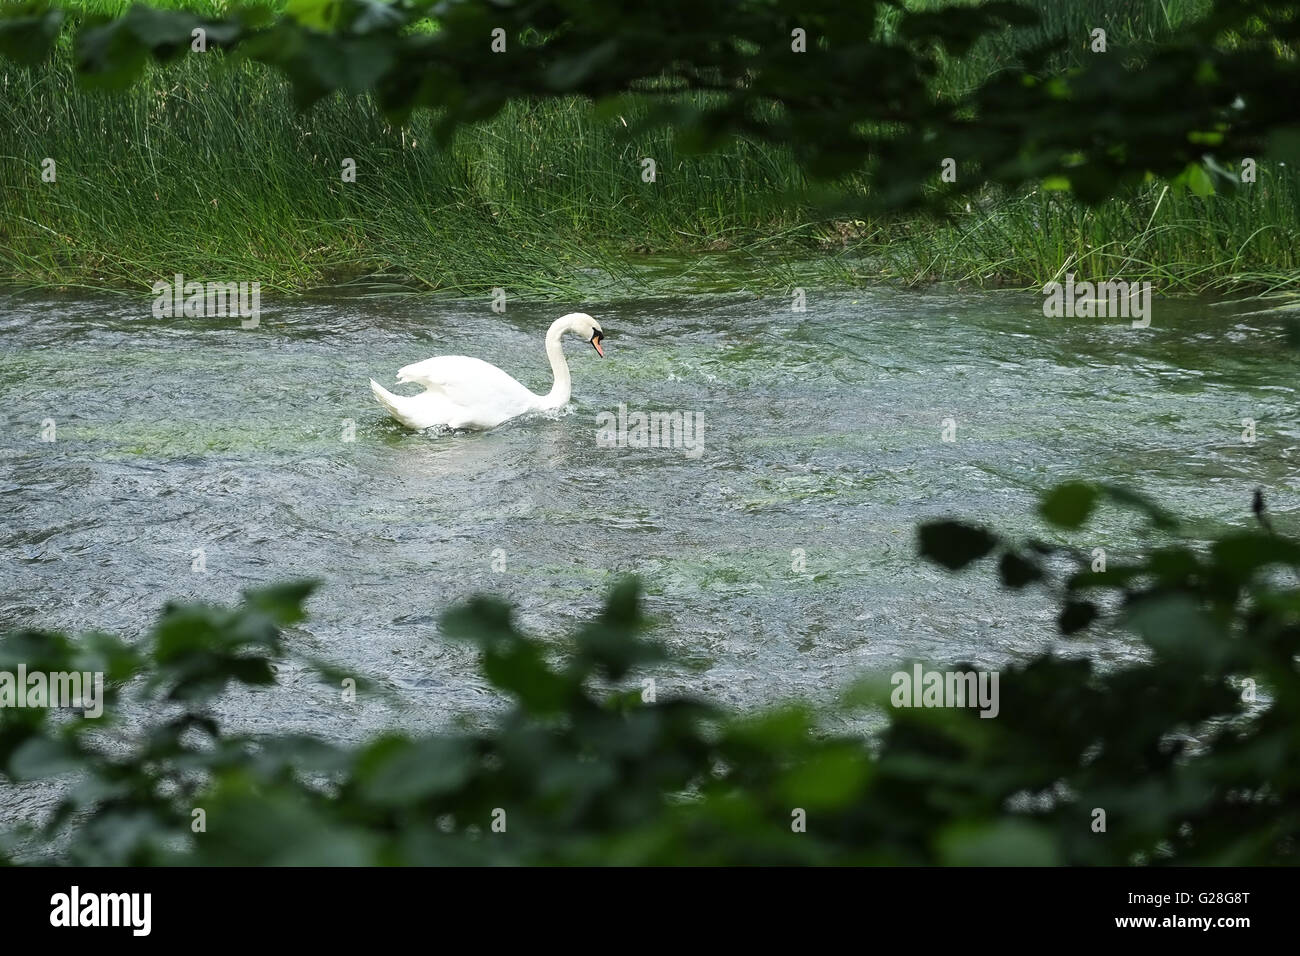 Mute Swan on the River Avon in the Warwickshire village of Barford near Stratford-upon-Avon, England, UK. Stock Photo